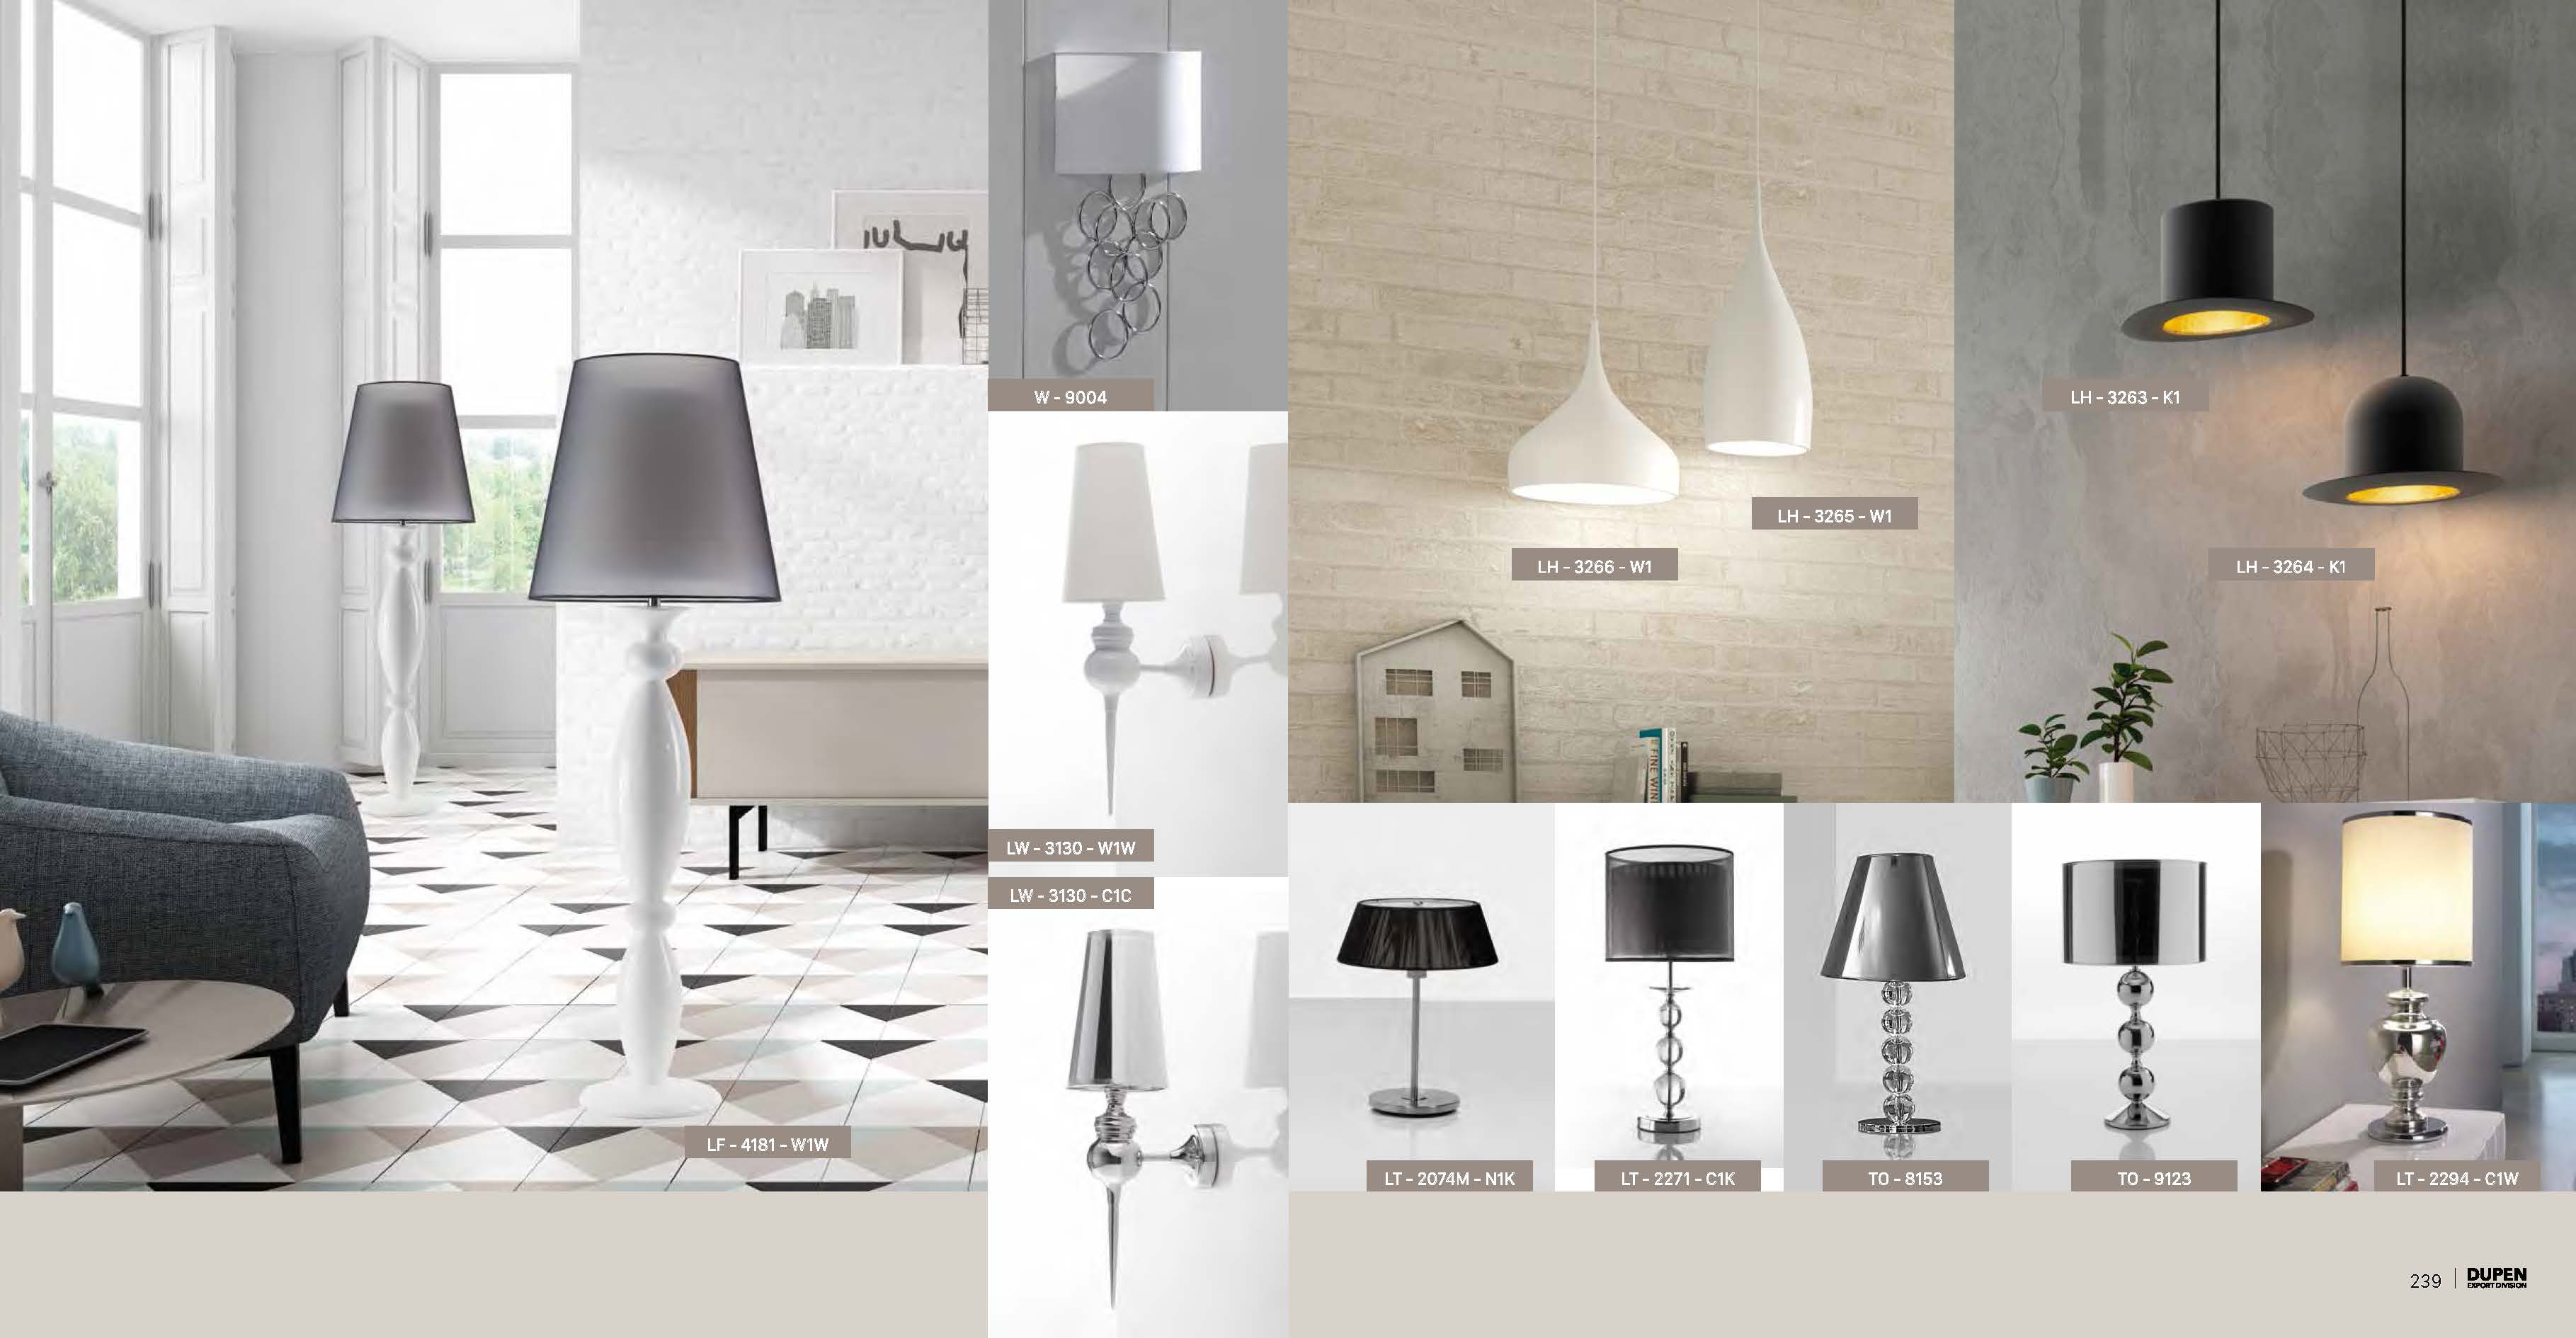 Brands Arredoclassic Living Room, Italy LT-2271-C1K, TO-9123, LT-2294-C1W